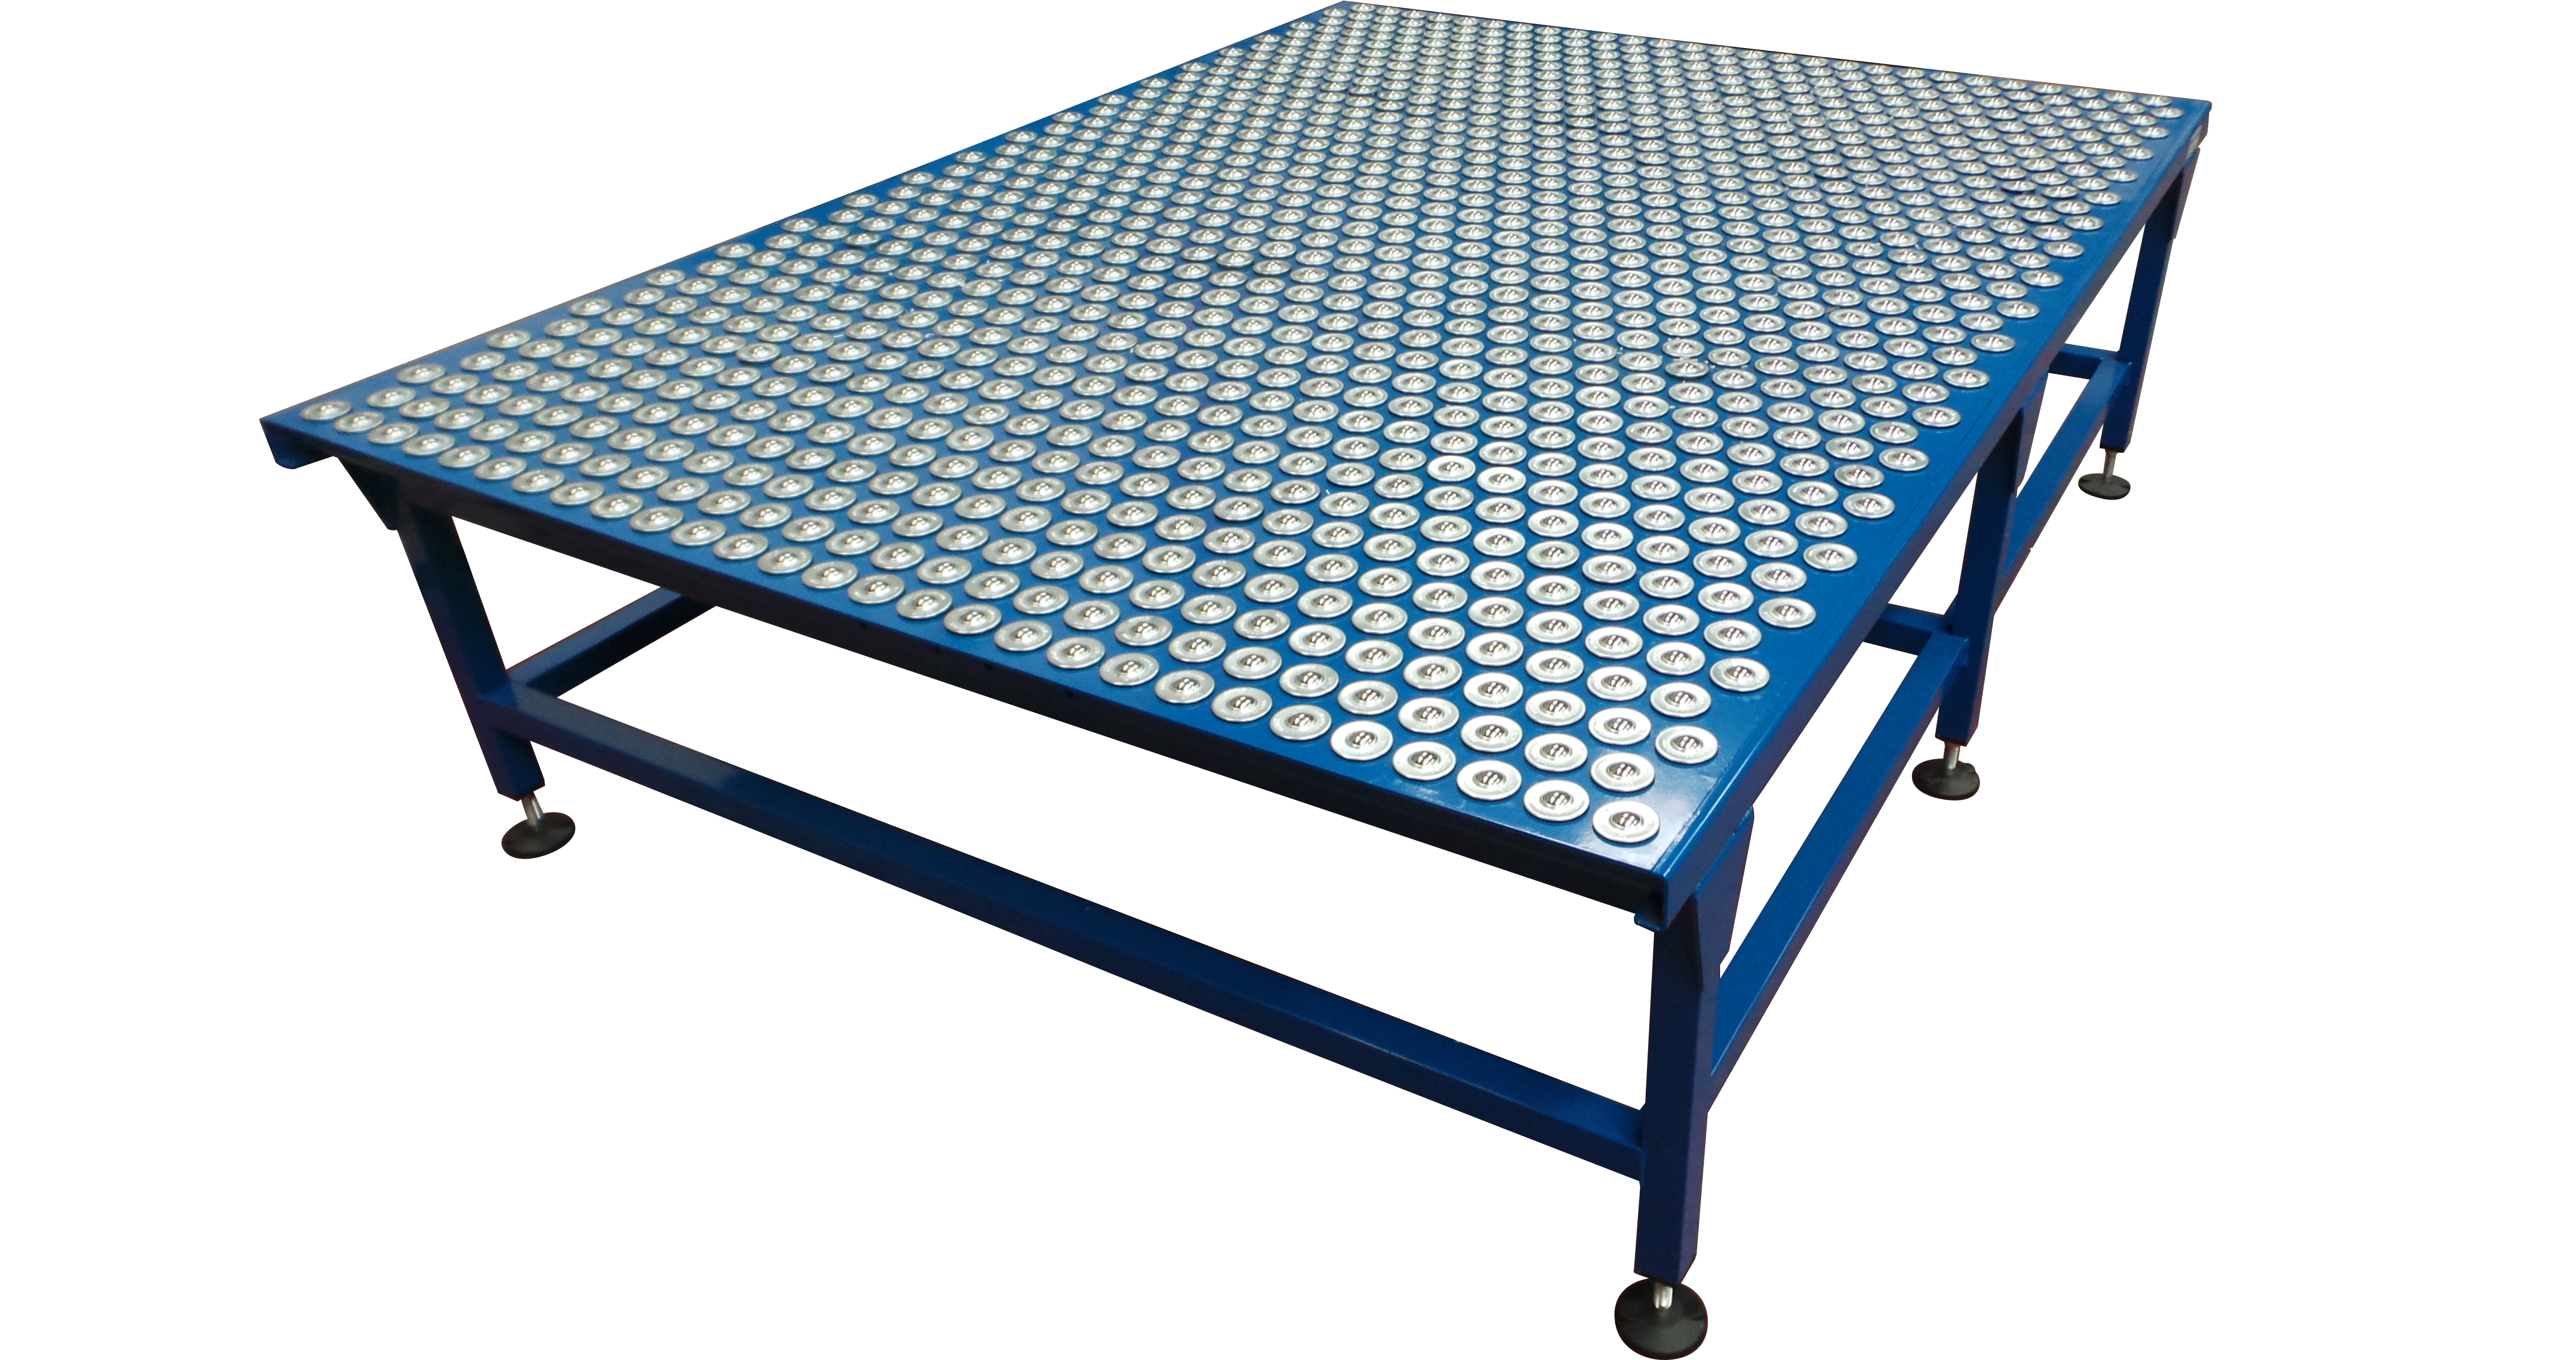 Standard ball table